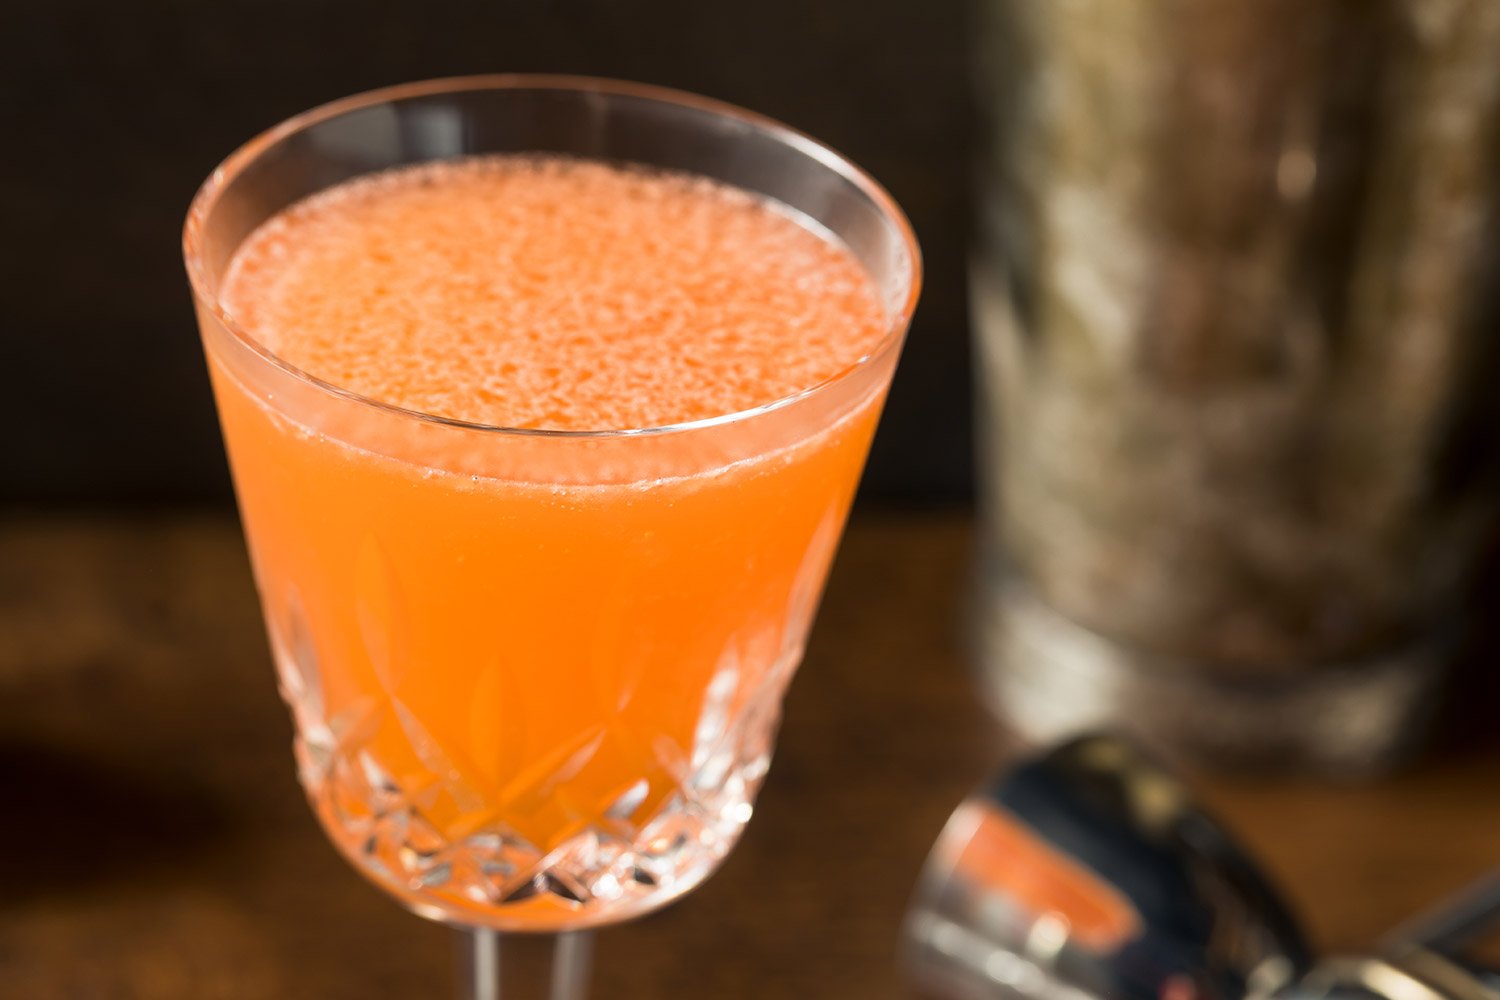 orange cocktail on bar counter with dark background